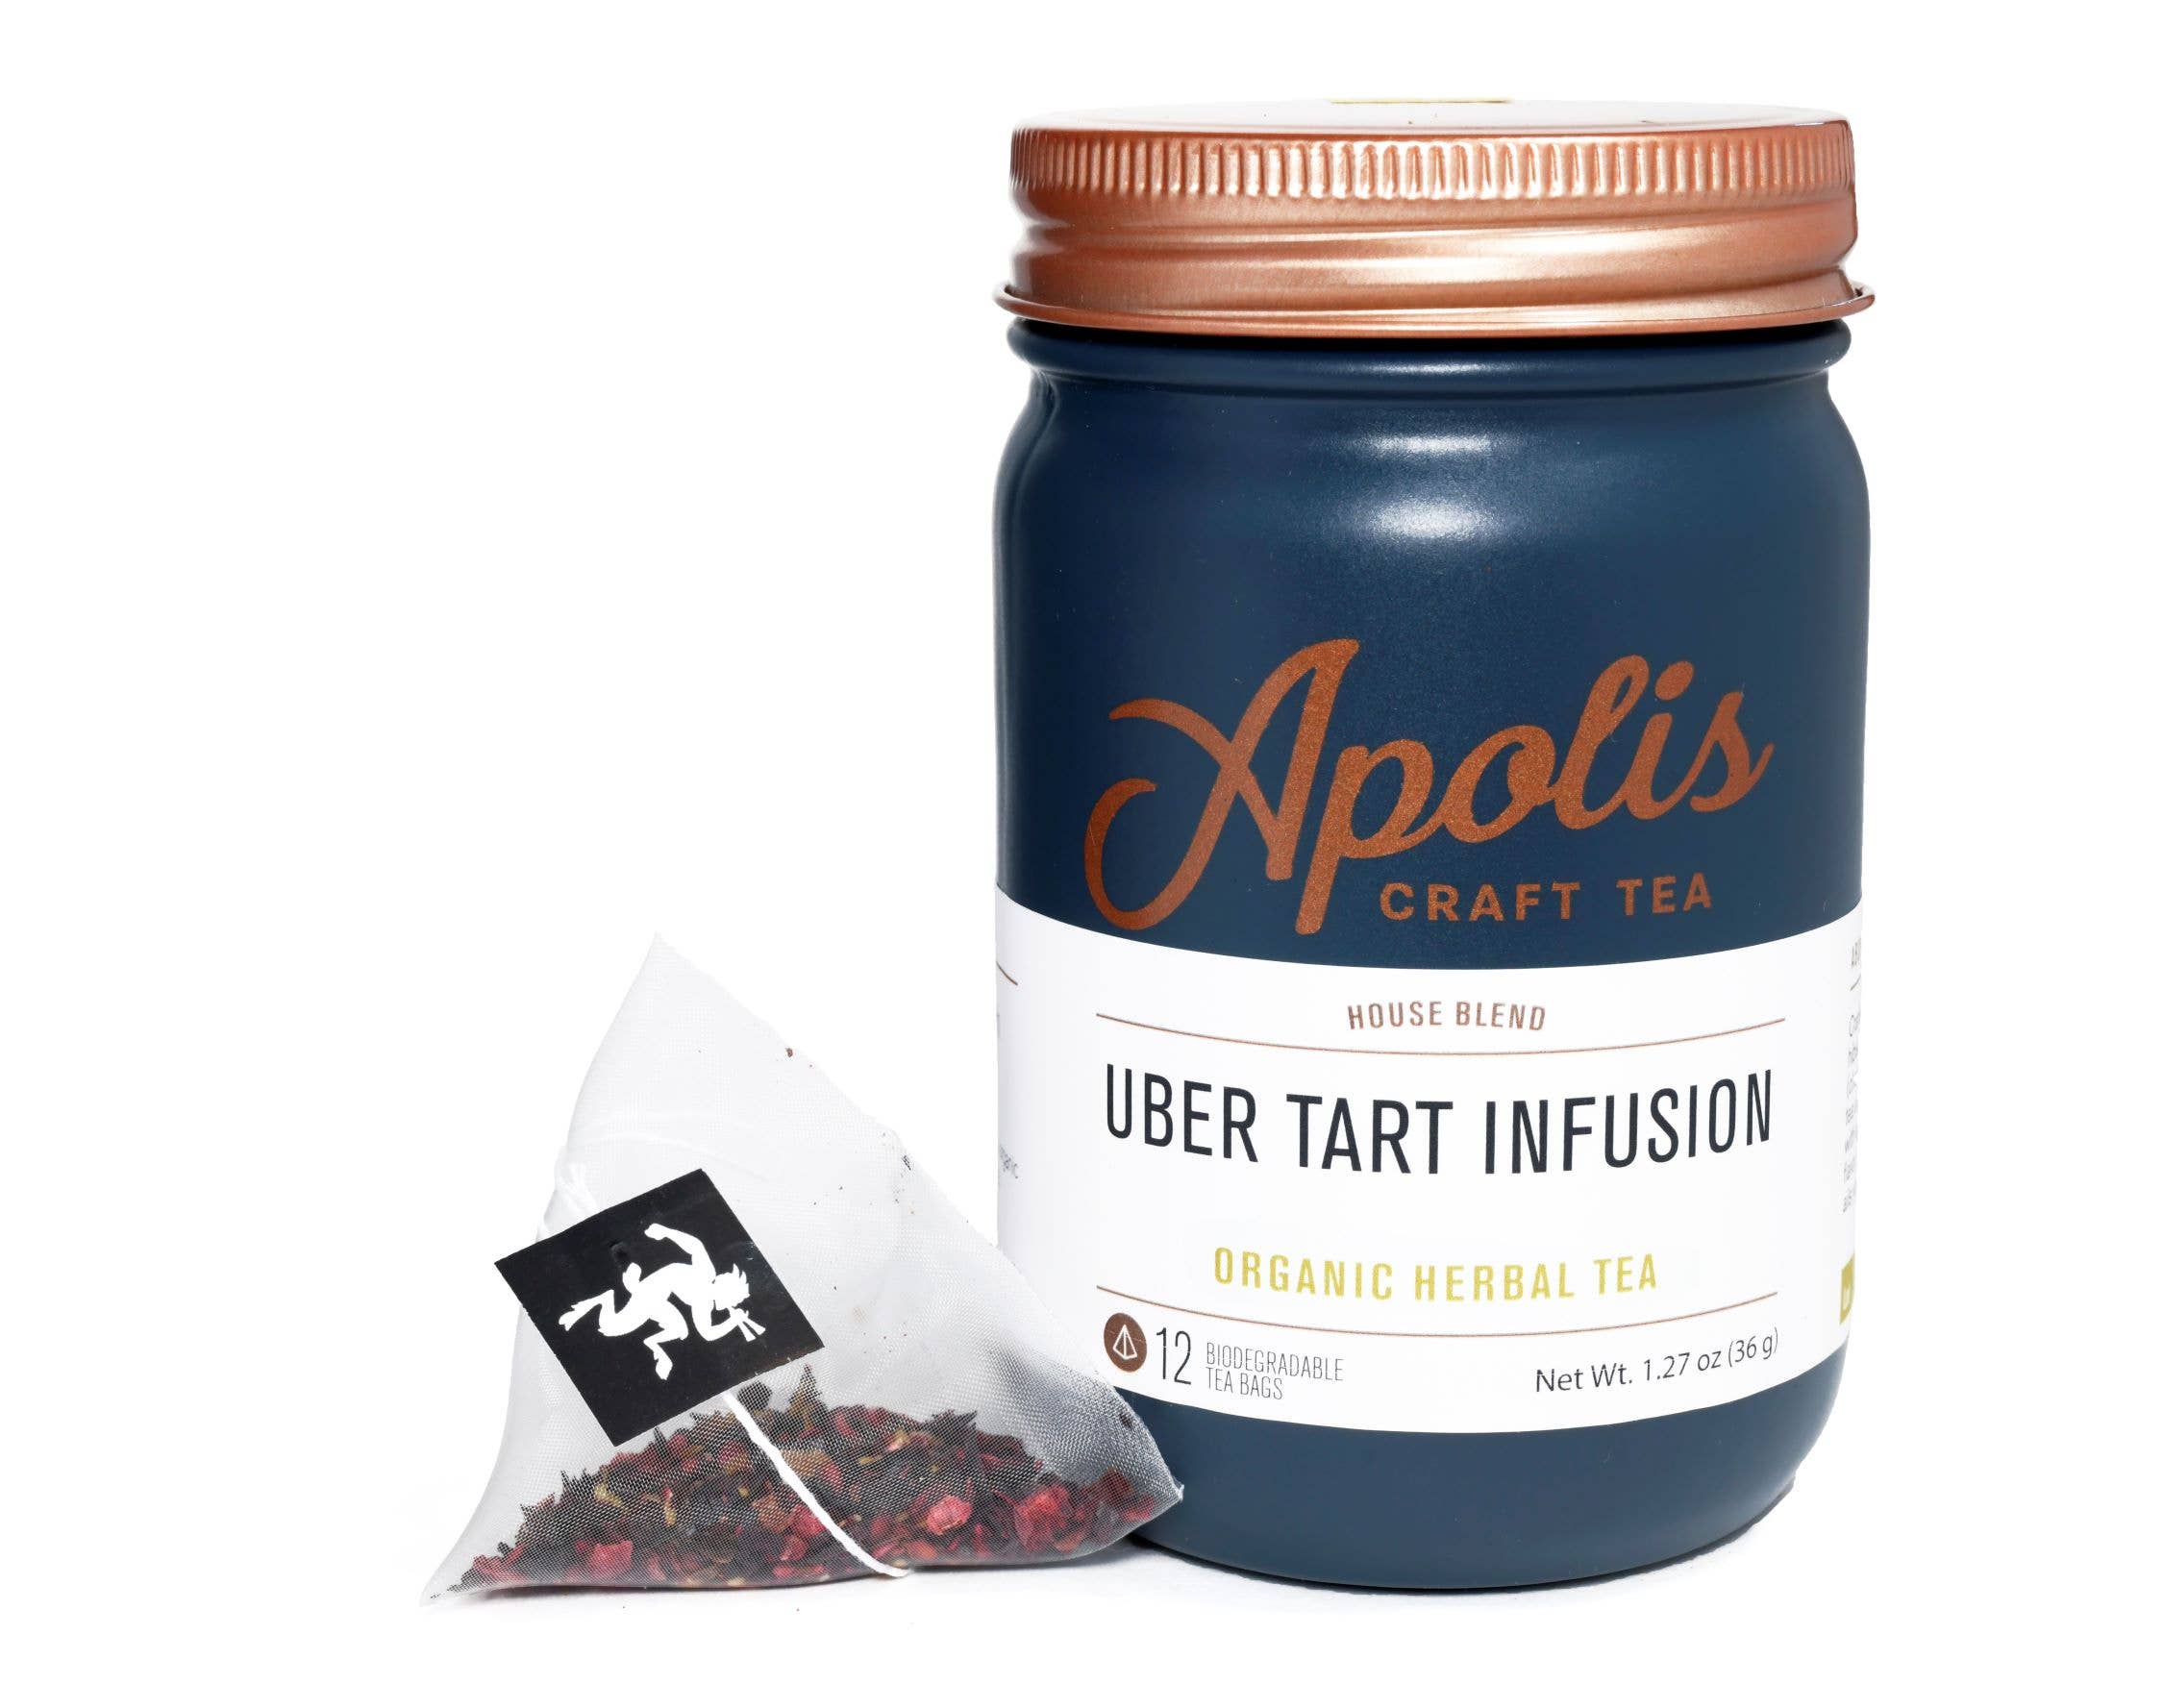 Uber Tart Infusion Craft Tea